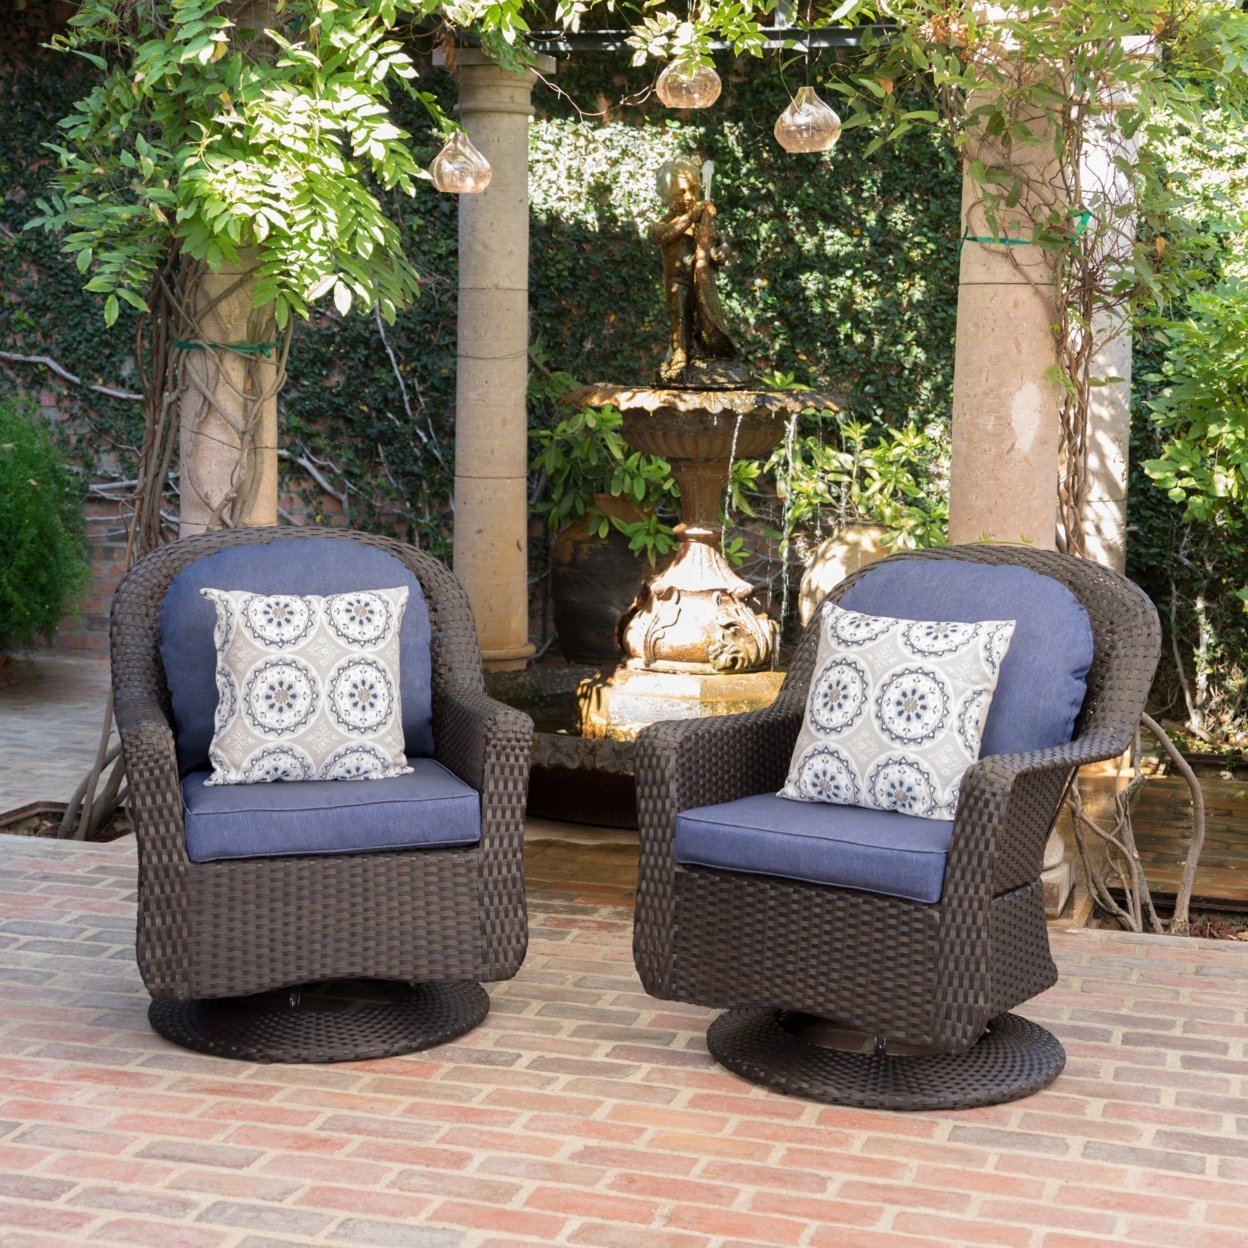 Linsten Outdoor Wicker Swivel Club Chairs With Water Resistant Cushion - Set Of 4, Dark Brown Wicker